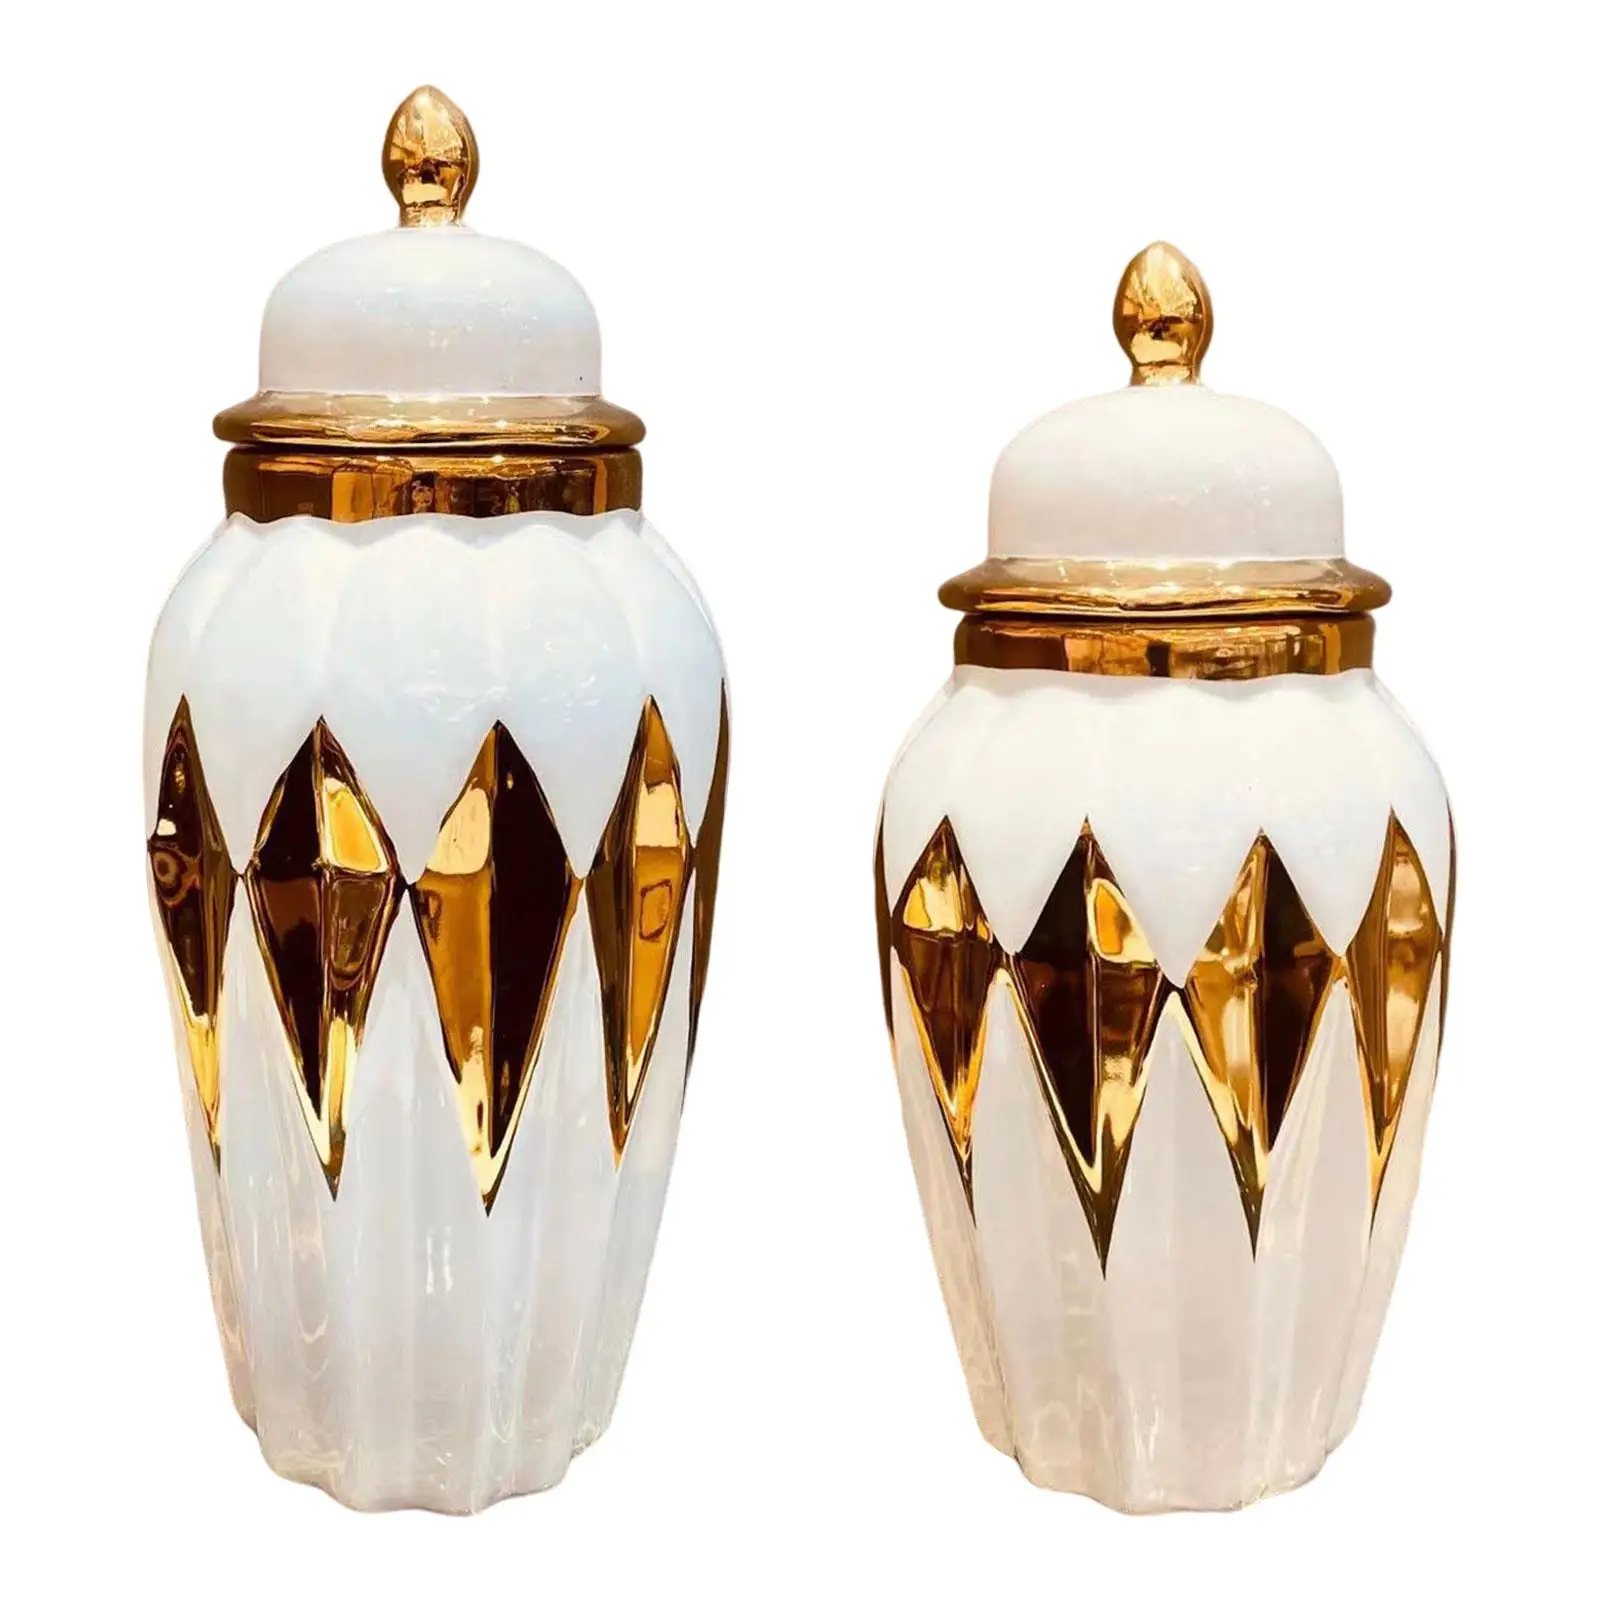 Ceramic Ginger Jars with Lid Vase Tea Tin Candy Holder for Home Decorations